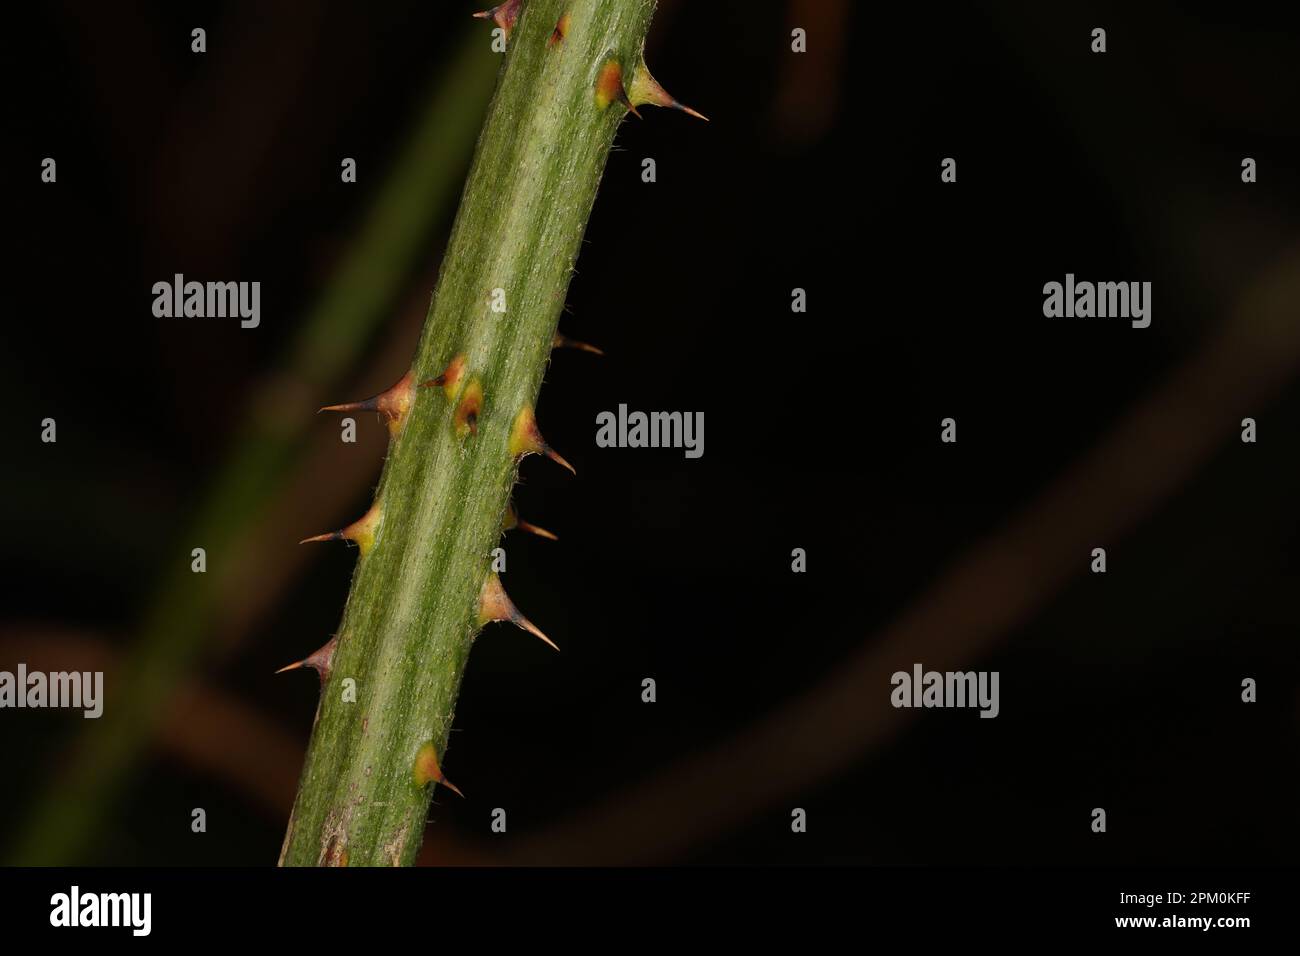 Palo con espinas fotografías e imágenes de alta resolución - Alamy